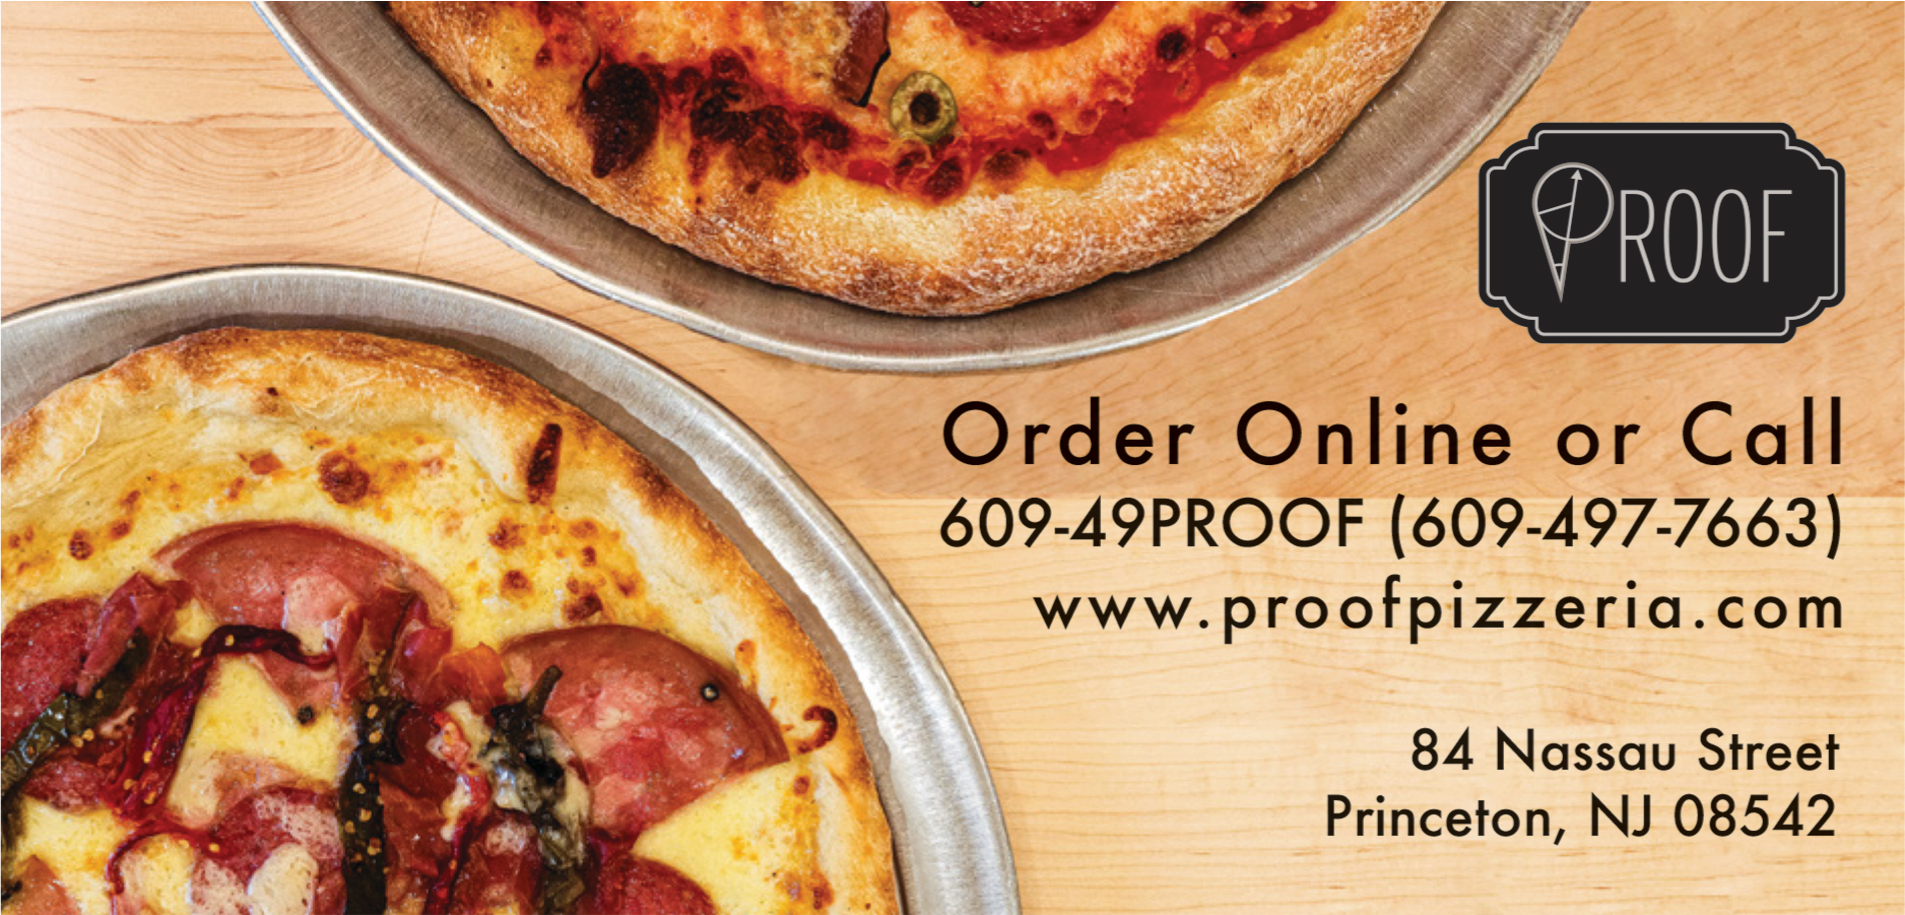 Proof Pizza Print Ad